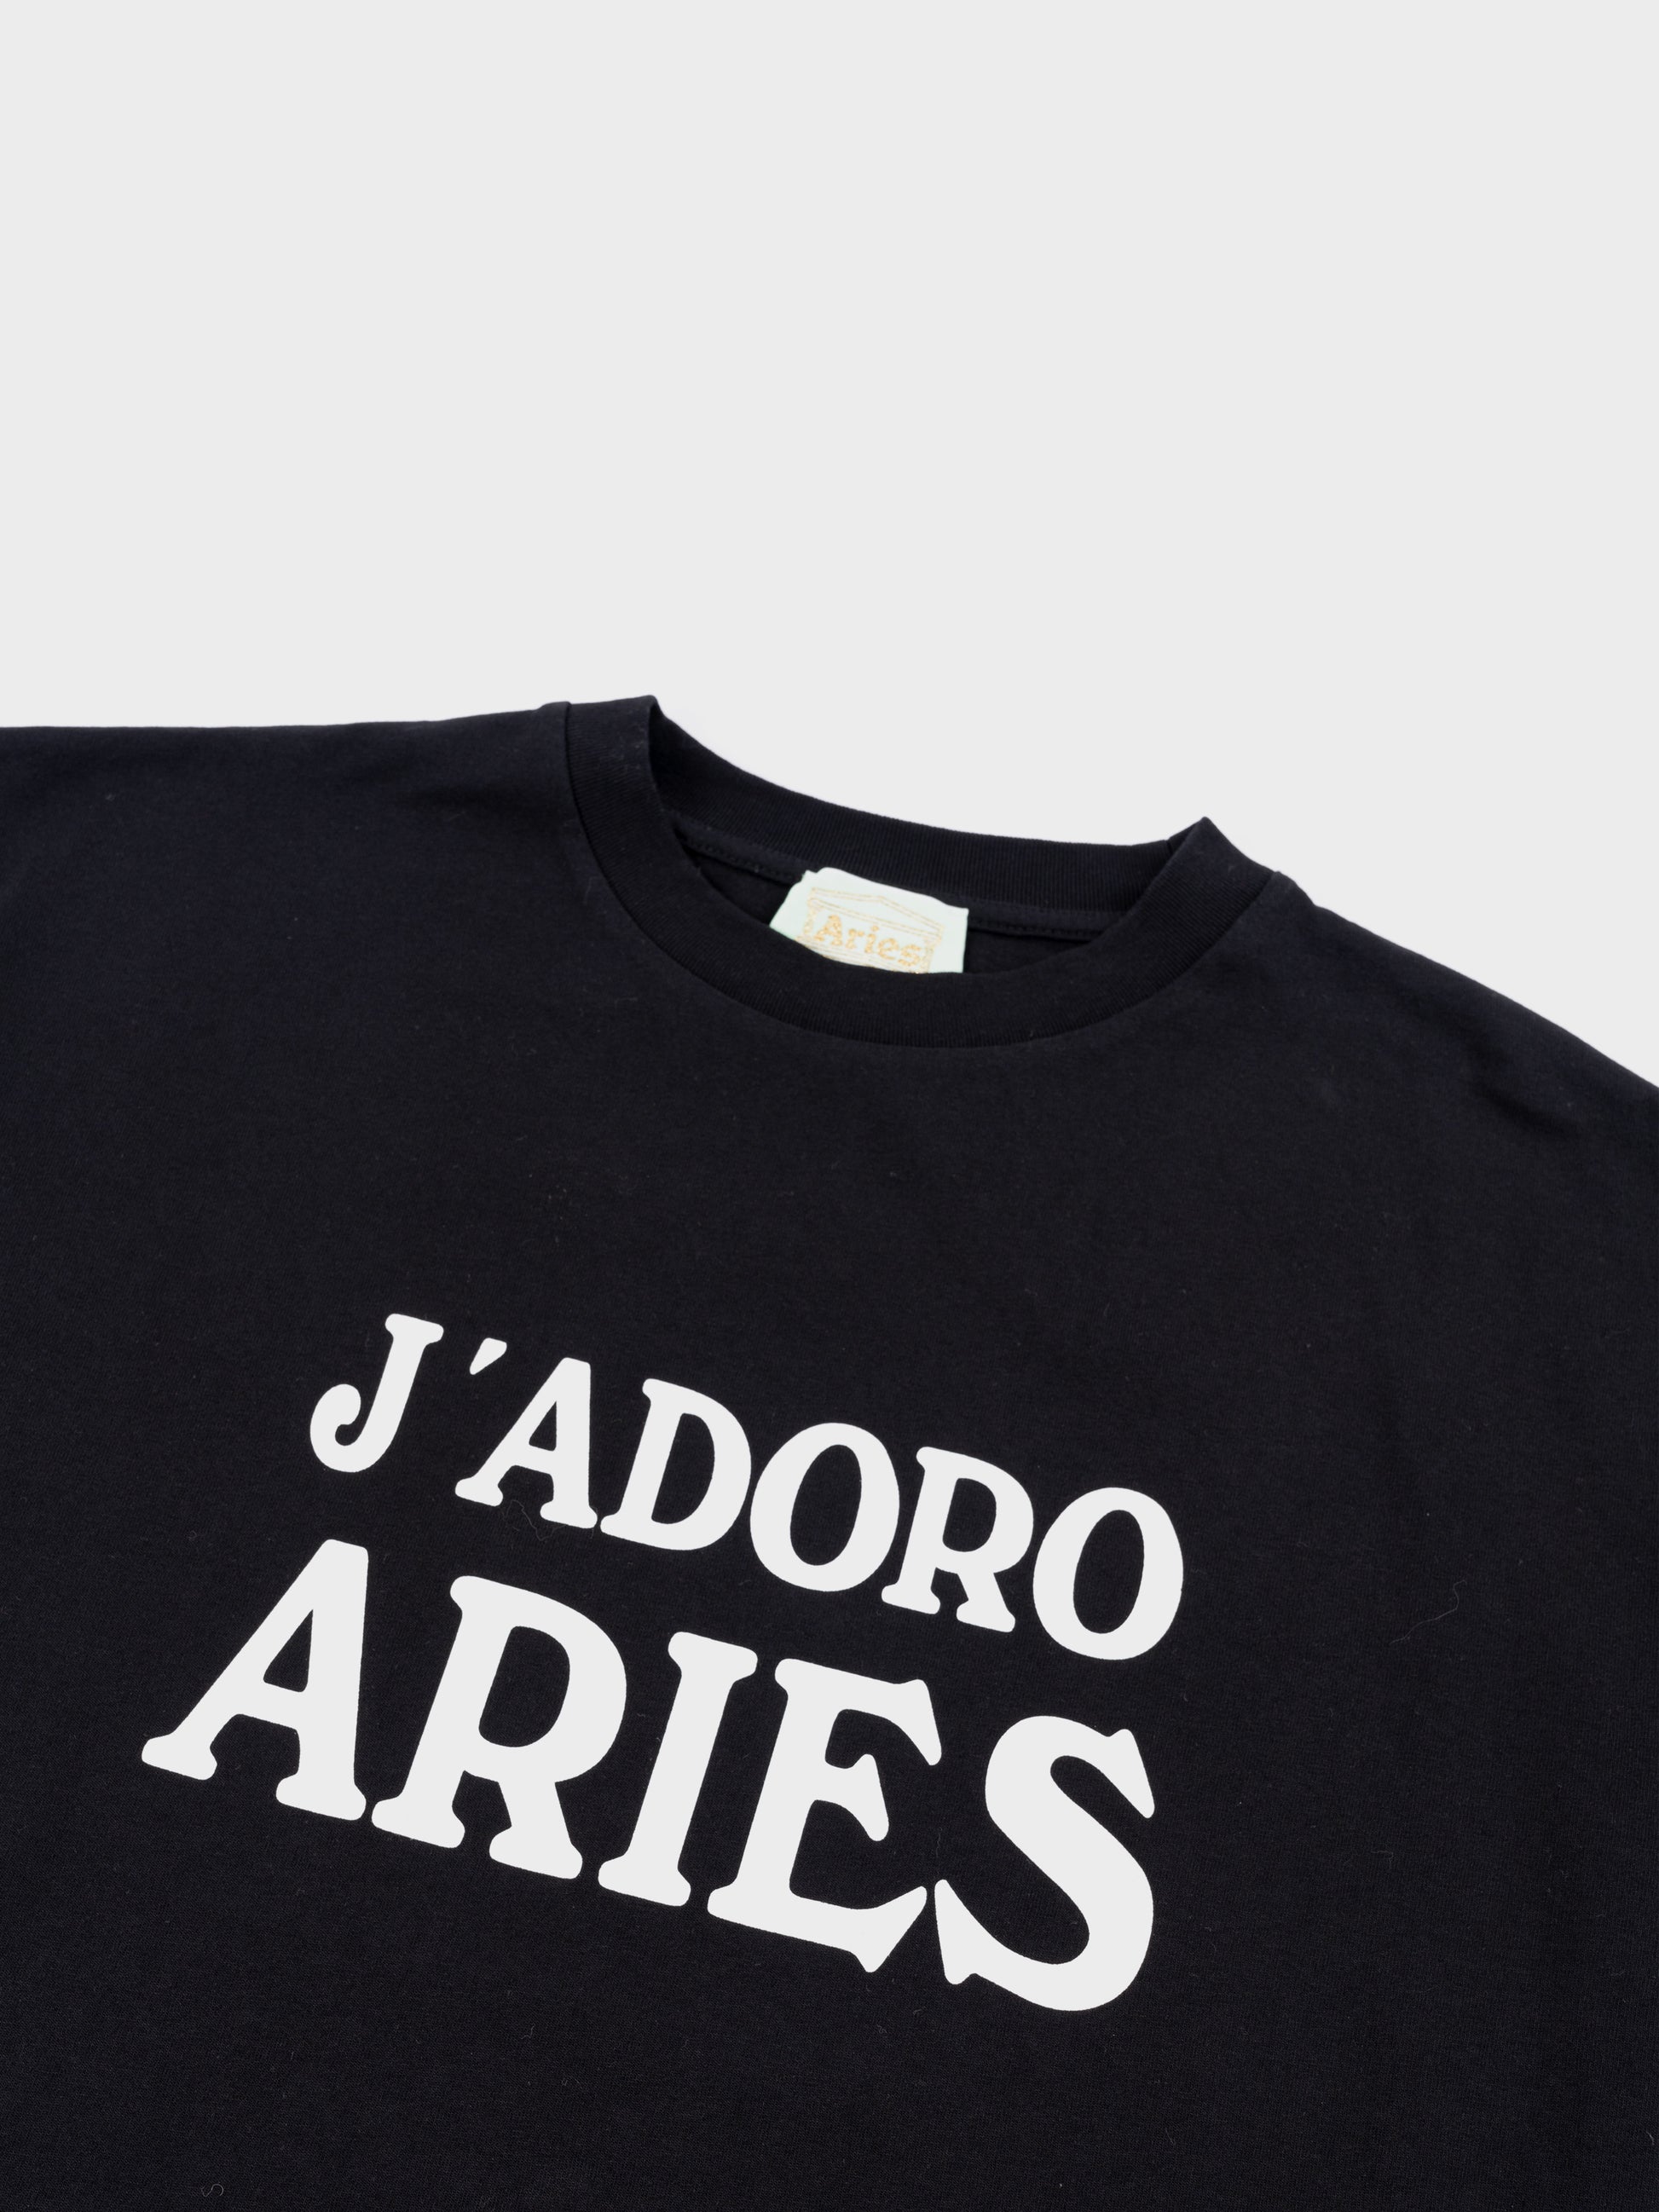 Aries J'adoro Aries SS T-Shirt - Black